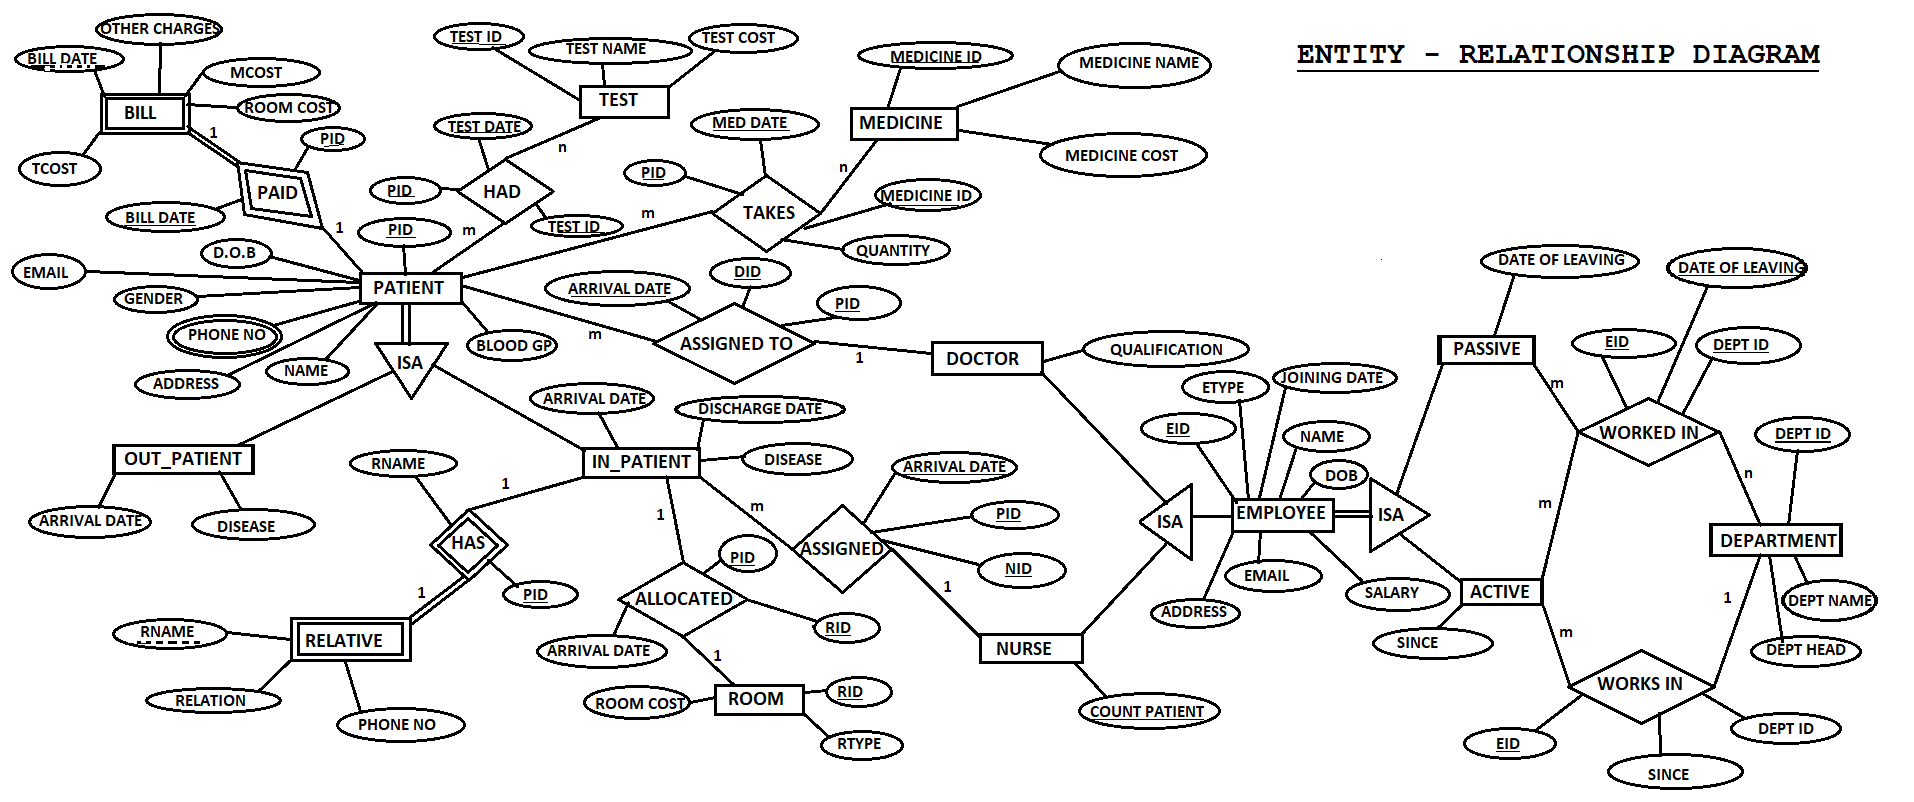 E-R Diagram · Issue #1 · Vikesh8860/hospital-Management throughout Er Diagram Project